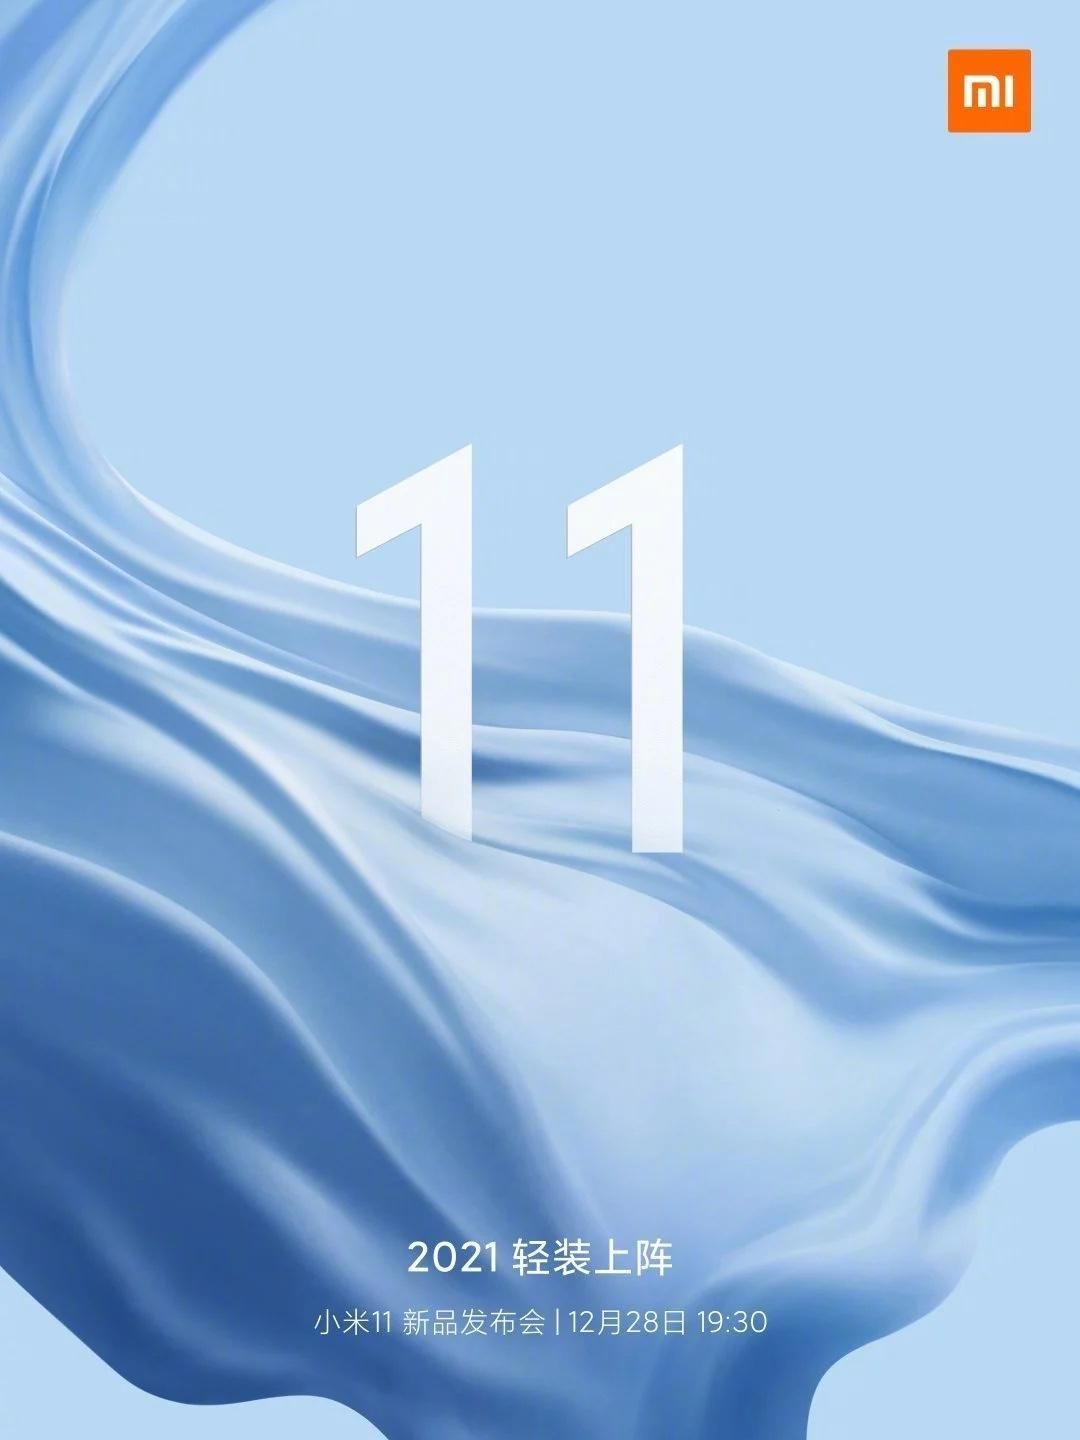 Xiaomi Mi 11 teaser poster